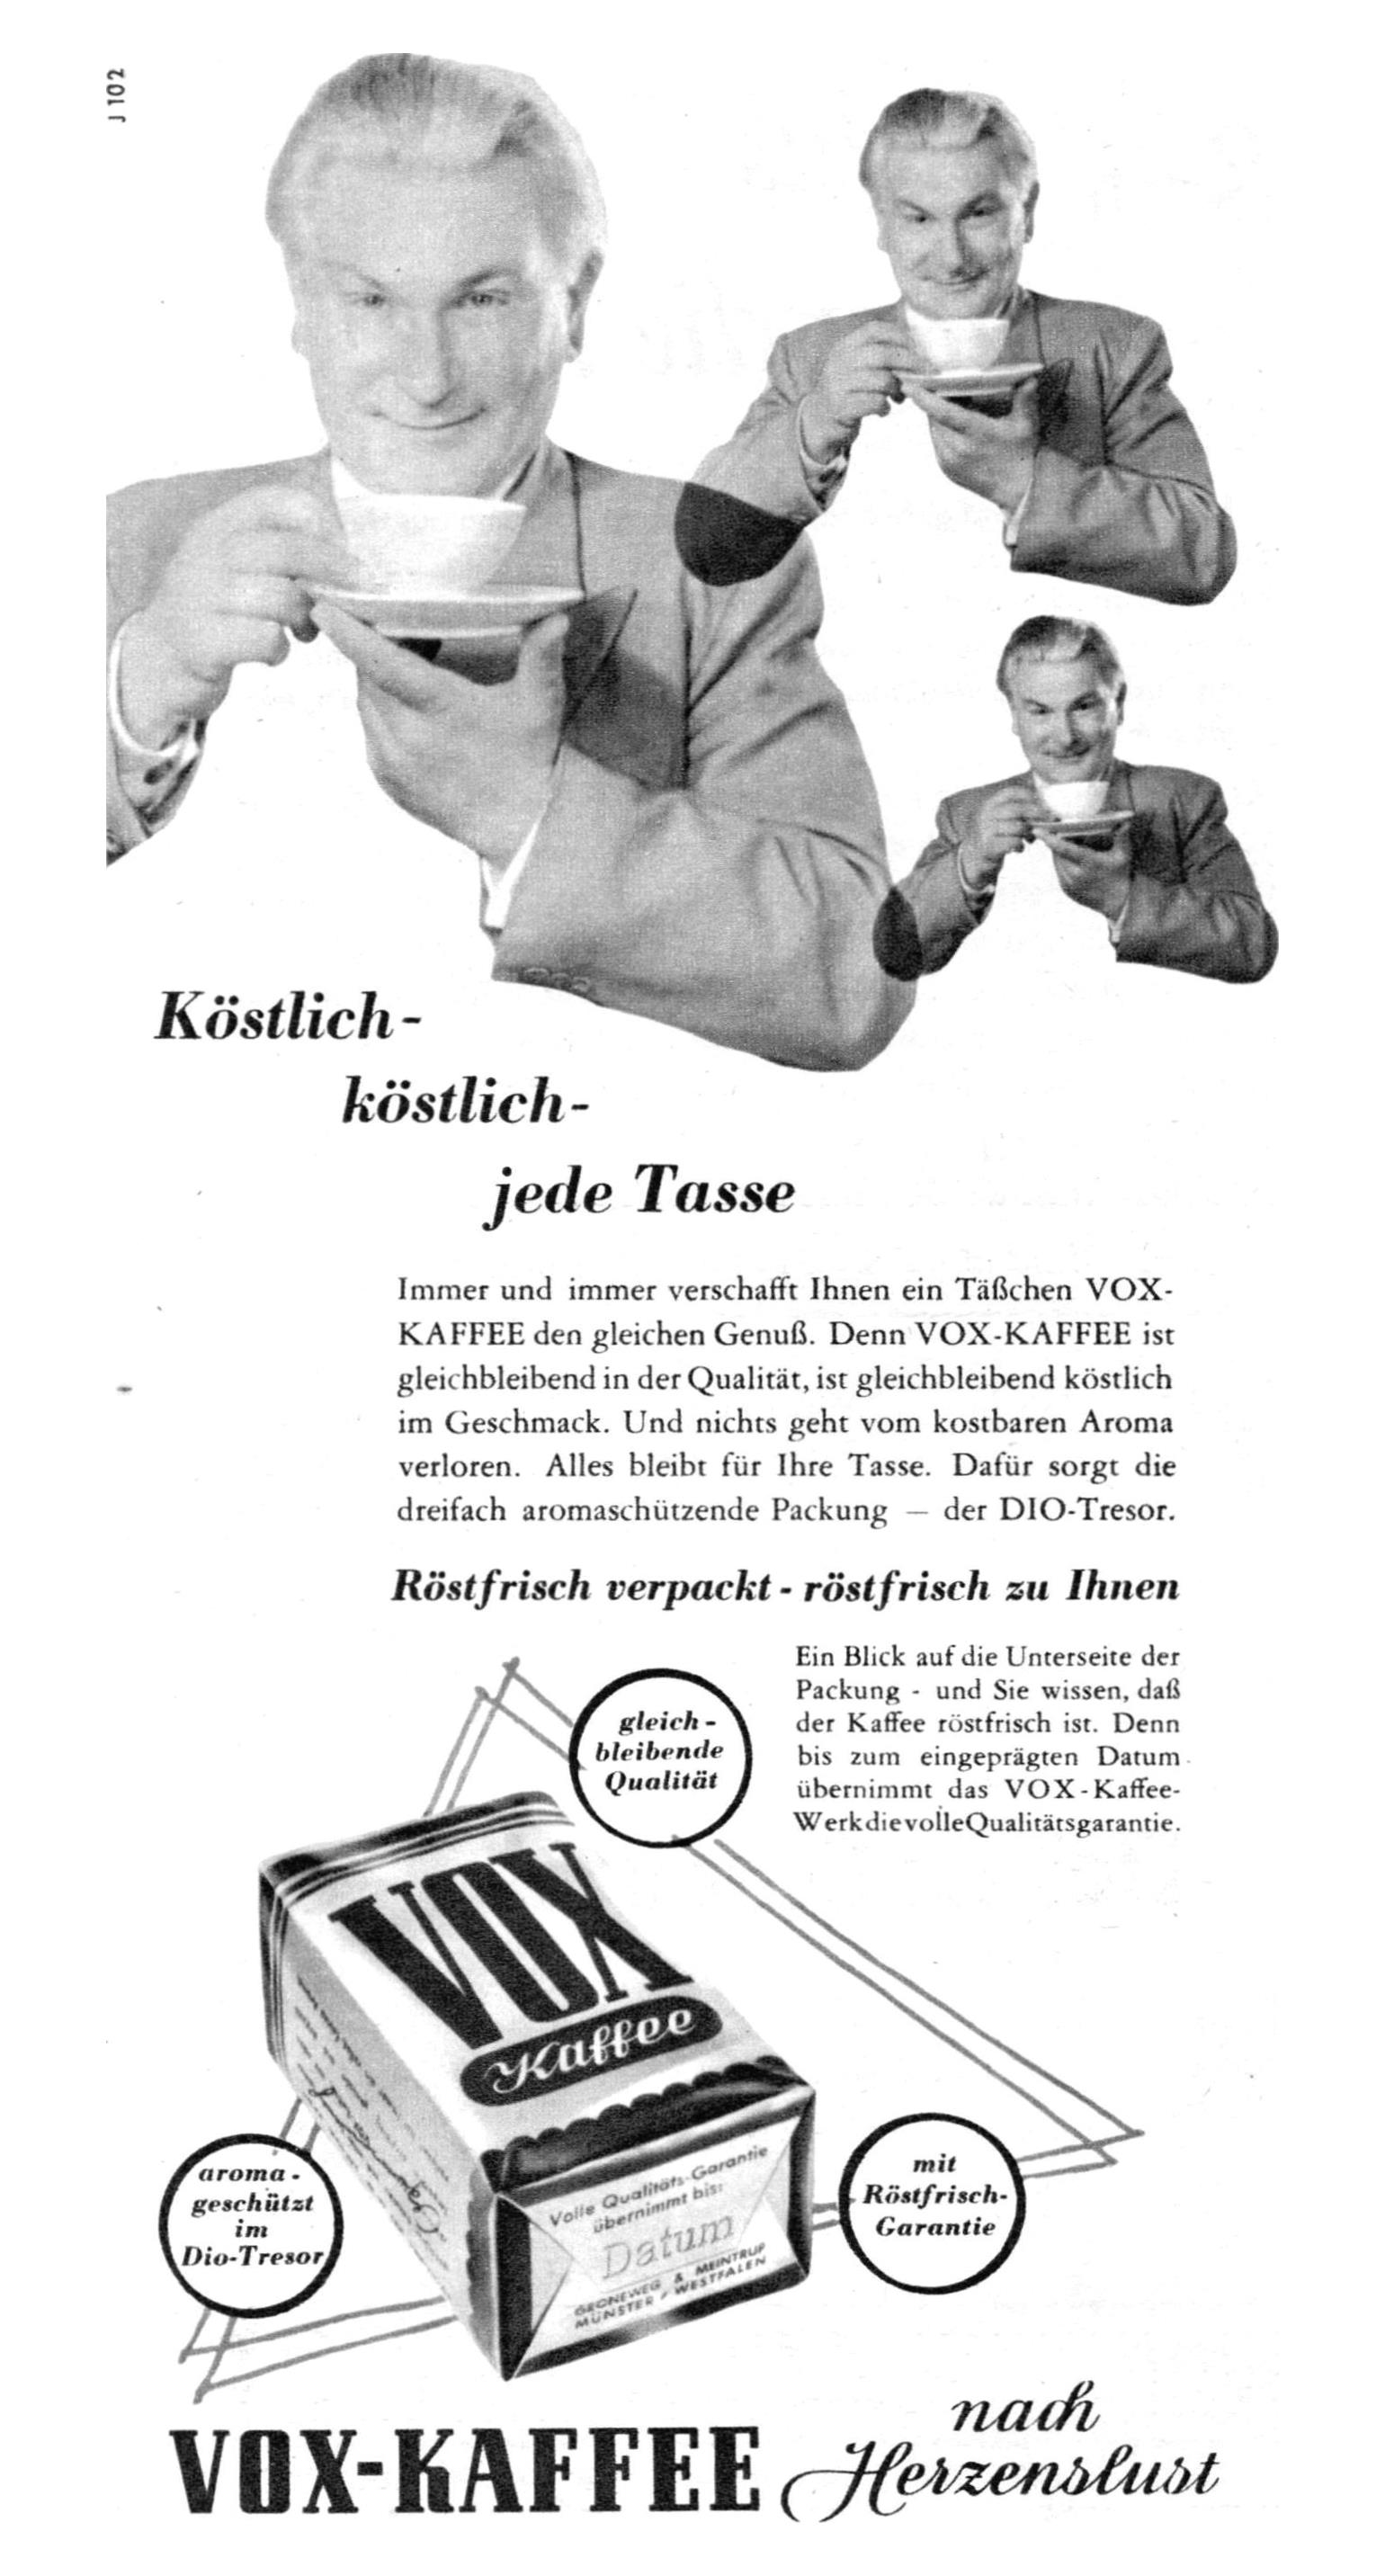 Vox-Kaffee 1954 0.jpg